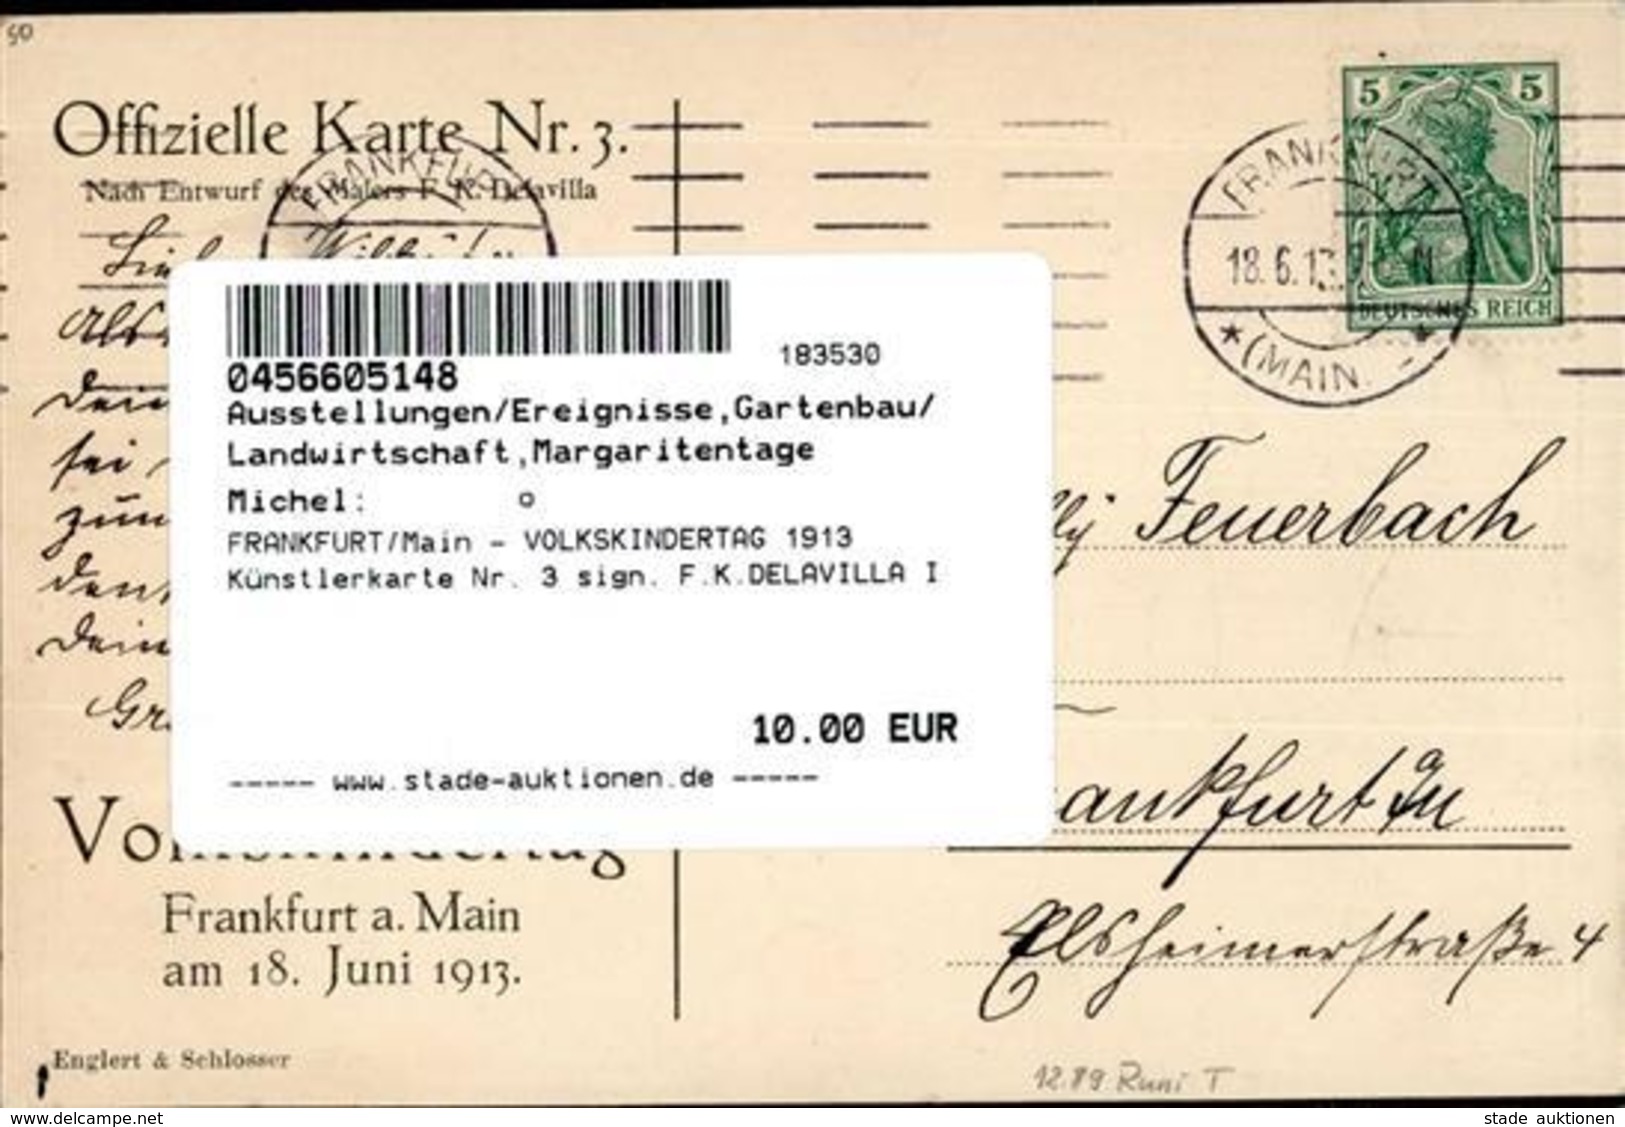 FRANKFURT/Main - VOLKSKINDERTAG 1913 Künstlerkarte Nr. 3 Sign. F.K.DELAVILLA I - Esposizioni